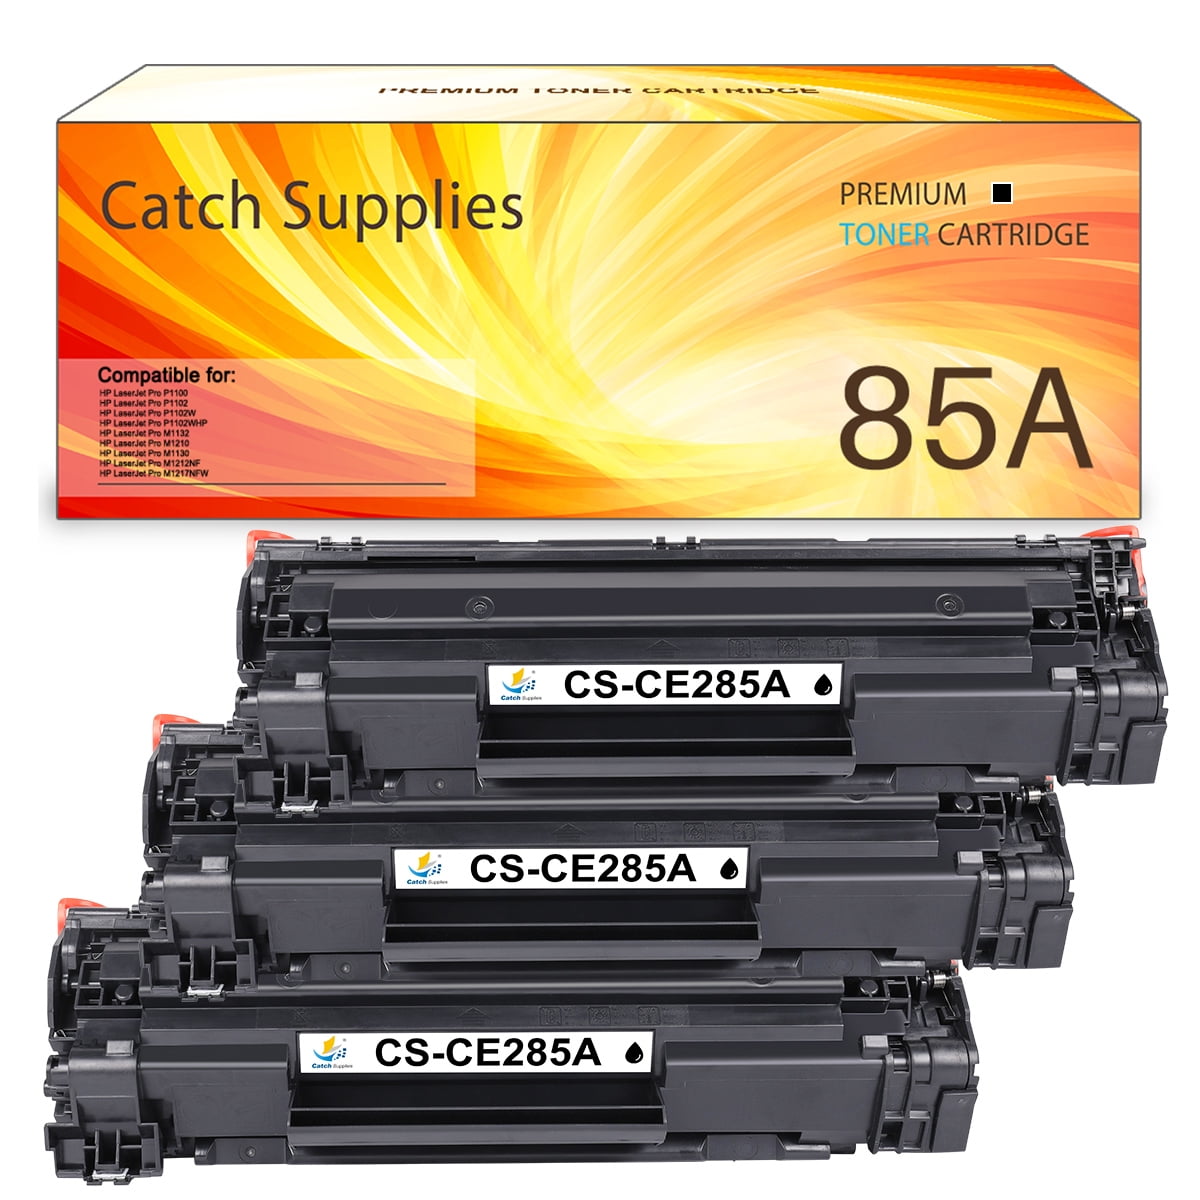 Catch Supplies Compatible toner for HP 85A CE285A Laserjet P1102w M1212nf P1102 P1109w M1217nfw 1102w Printer Ink (Black, 3-Pack) - Walmart.com